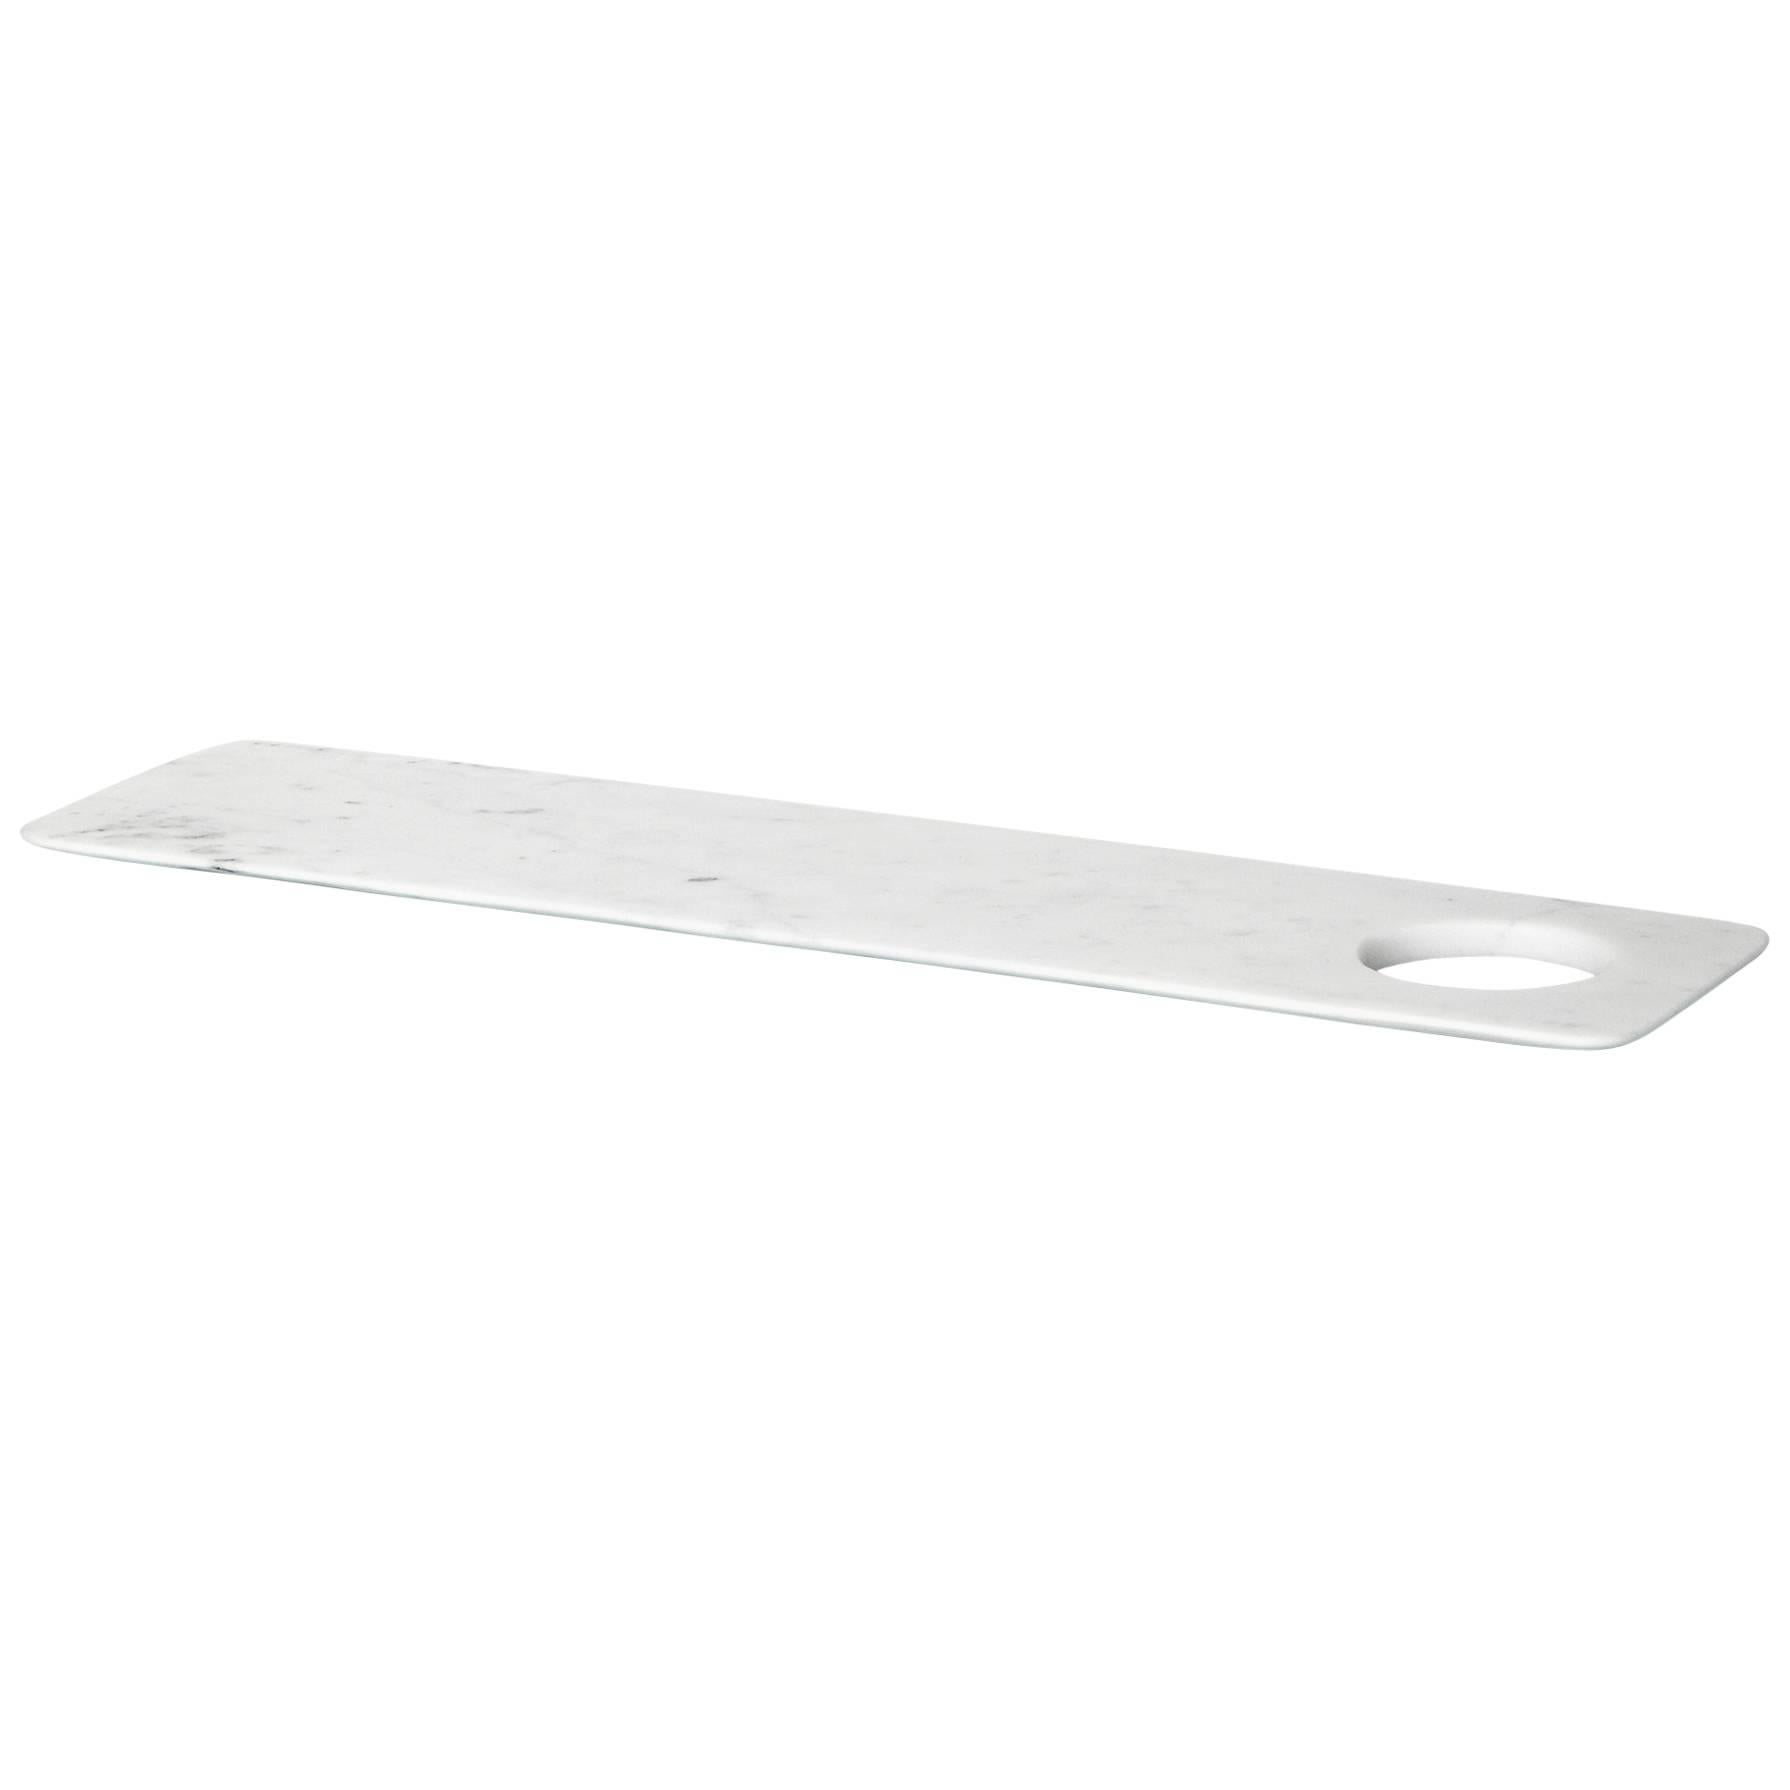 New Modern Tray/Chopping Board in White Carrara Marble, creator Studioformart